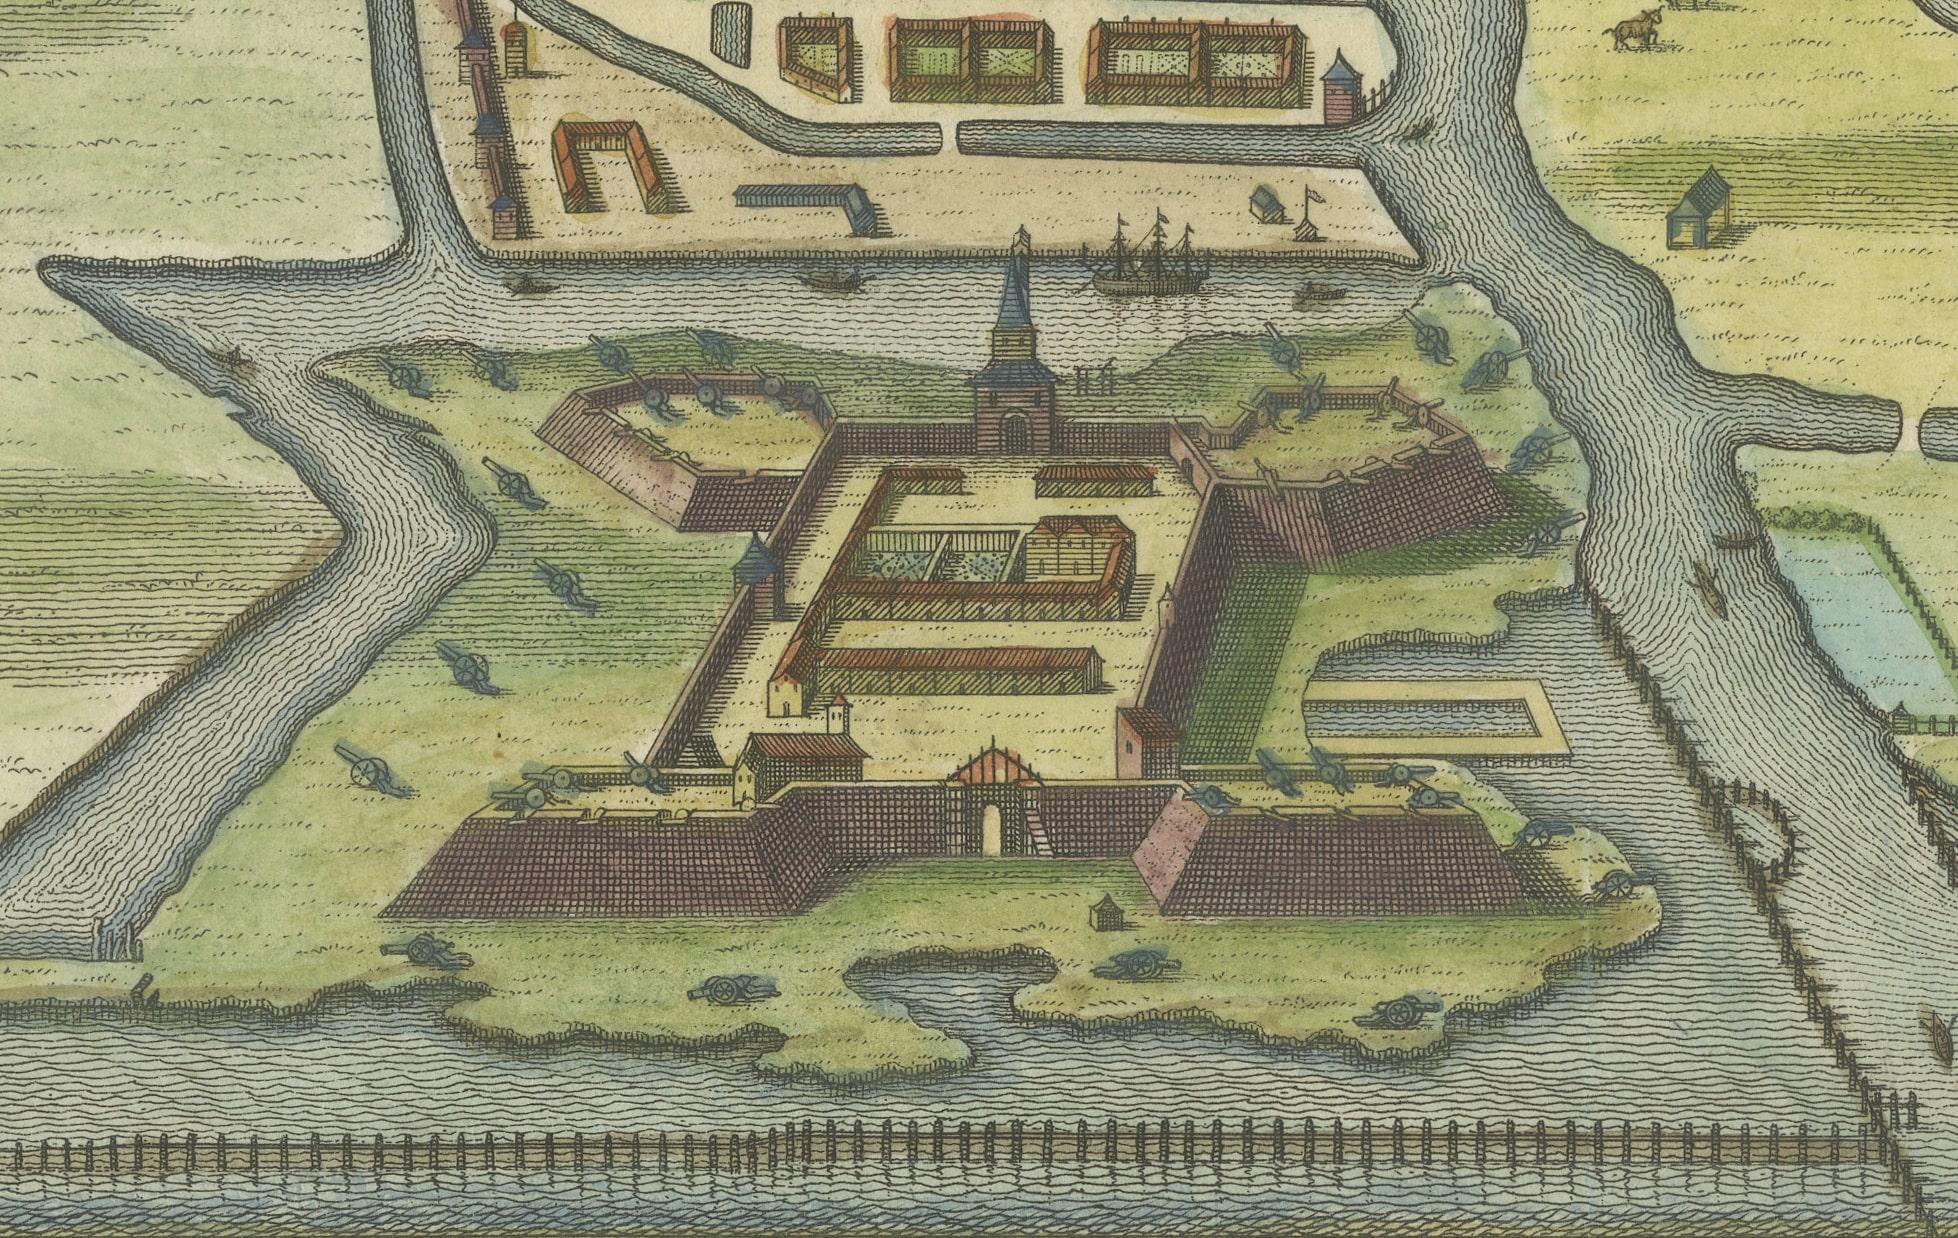 Engraved 1763 Batavia: A Detailed Bird's-Eye View of Jakarta in the Dutch Colonial Era